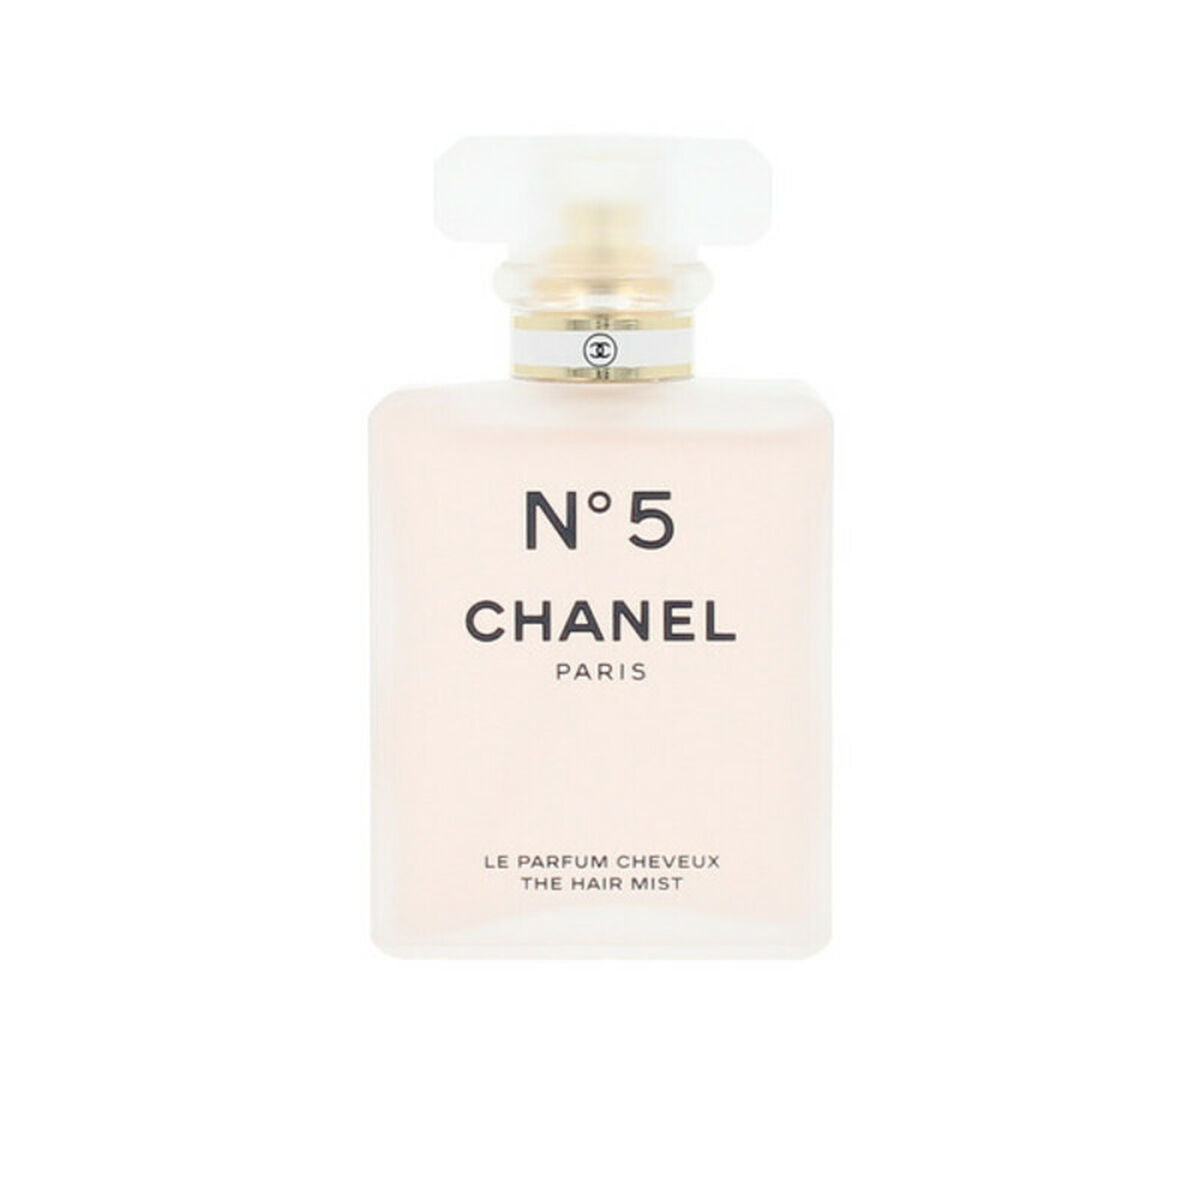 Chanel N°5 The Hair Mist (Le Parfum Cheveux)